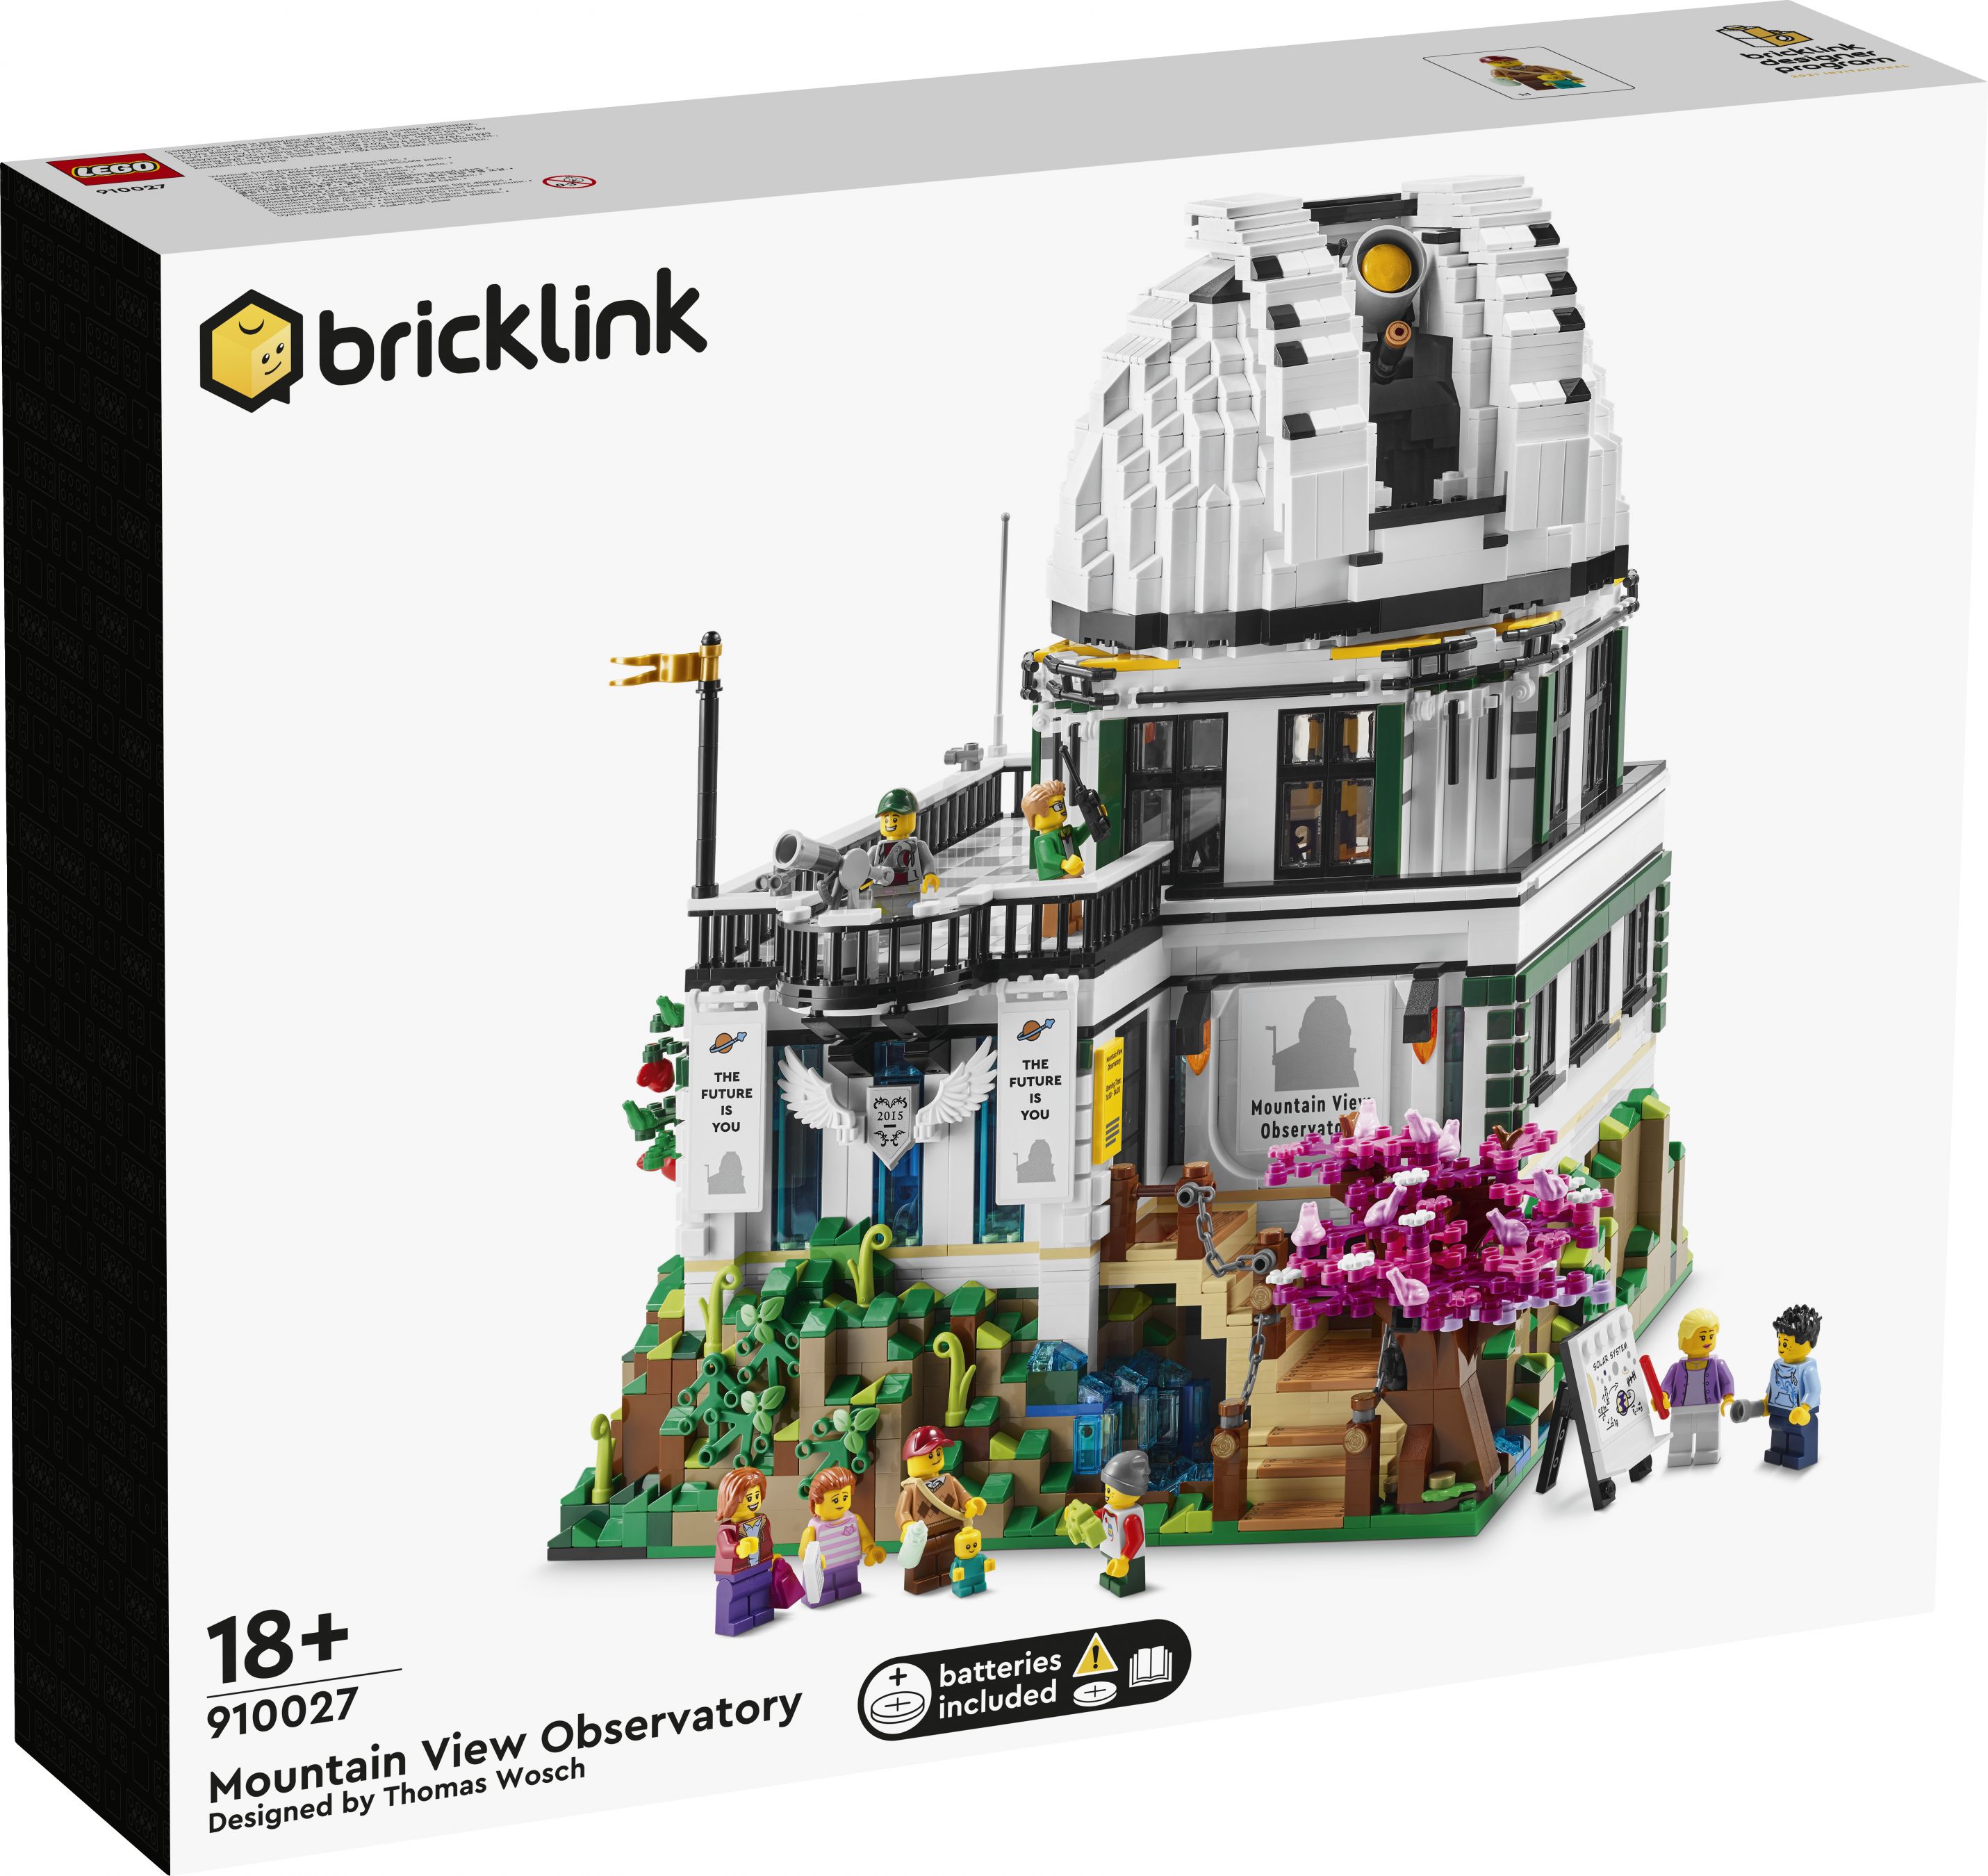 LEGO Bricklink 910027 Bergsternwarte LEGO_910027_Box1_v29.jpg